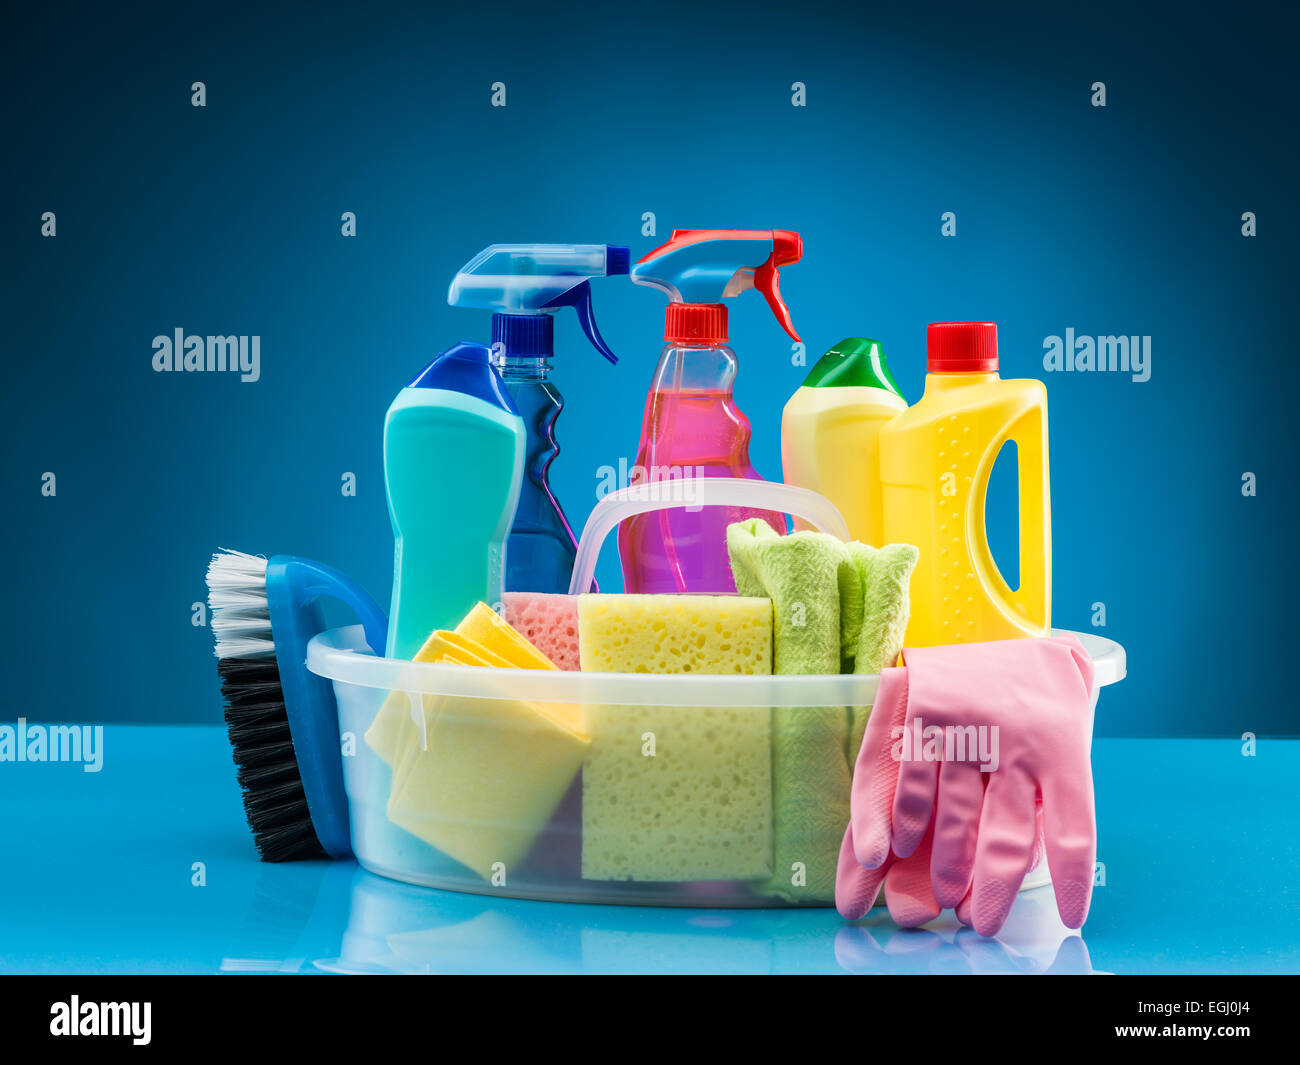 https://c8.alamy.com/comp/EGJ0J4/cleaning-products-and-supplies-in-basket-EGJ0J4.jpg